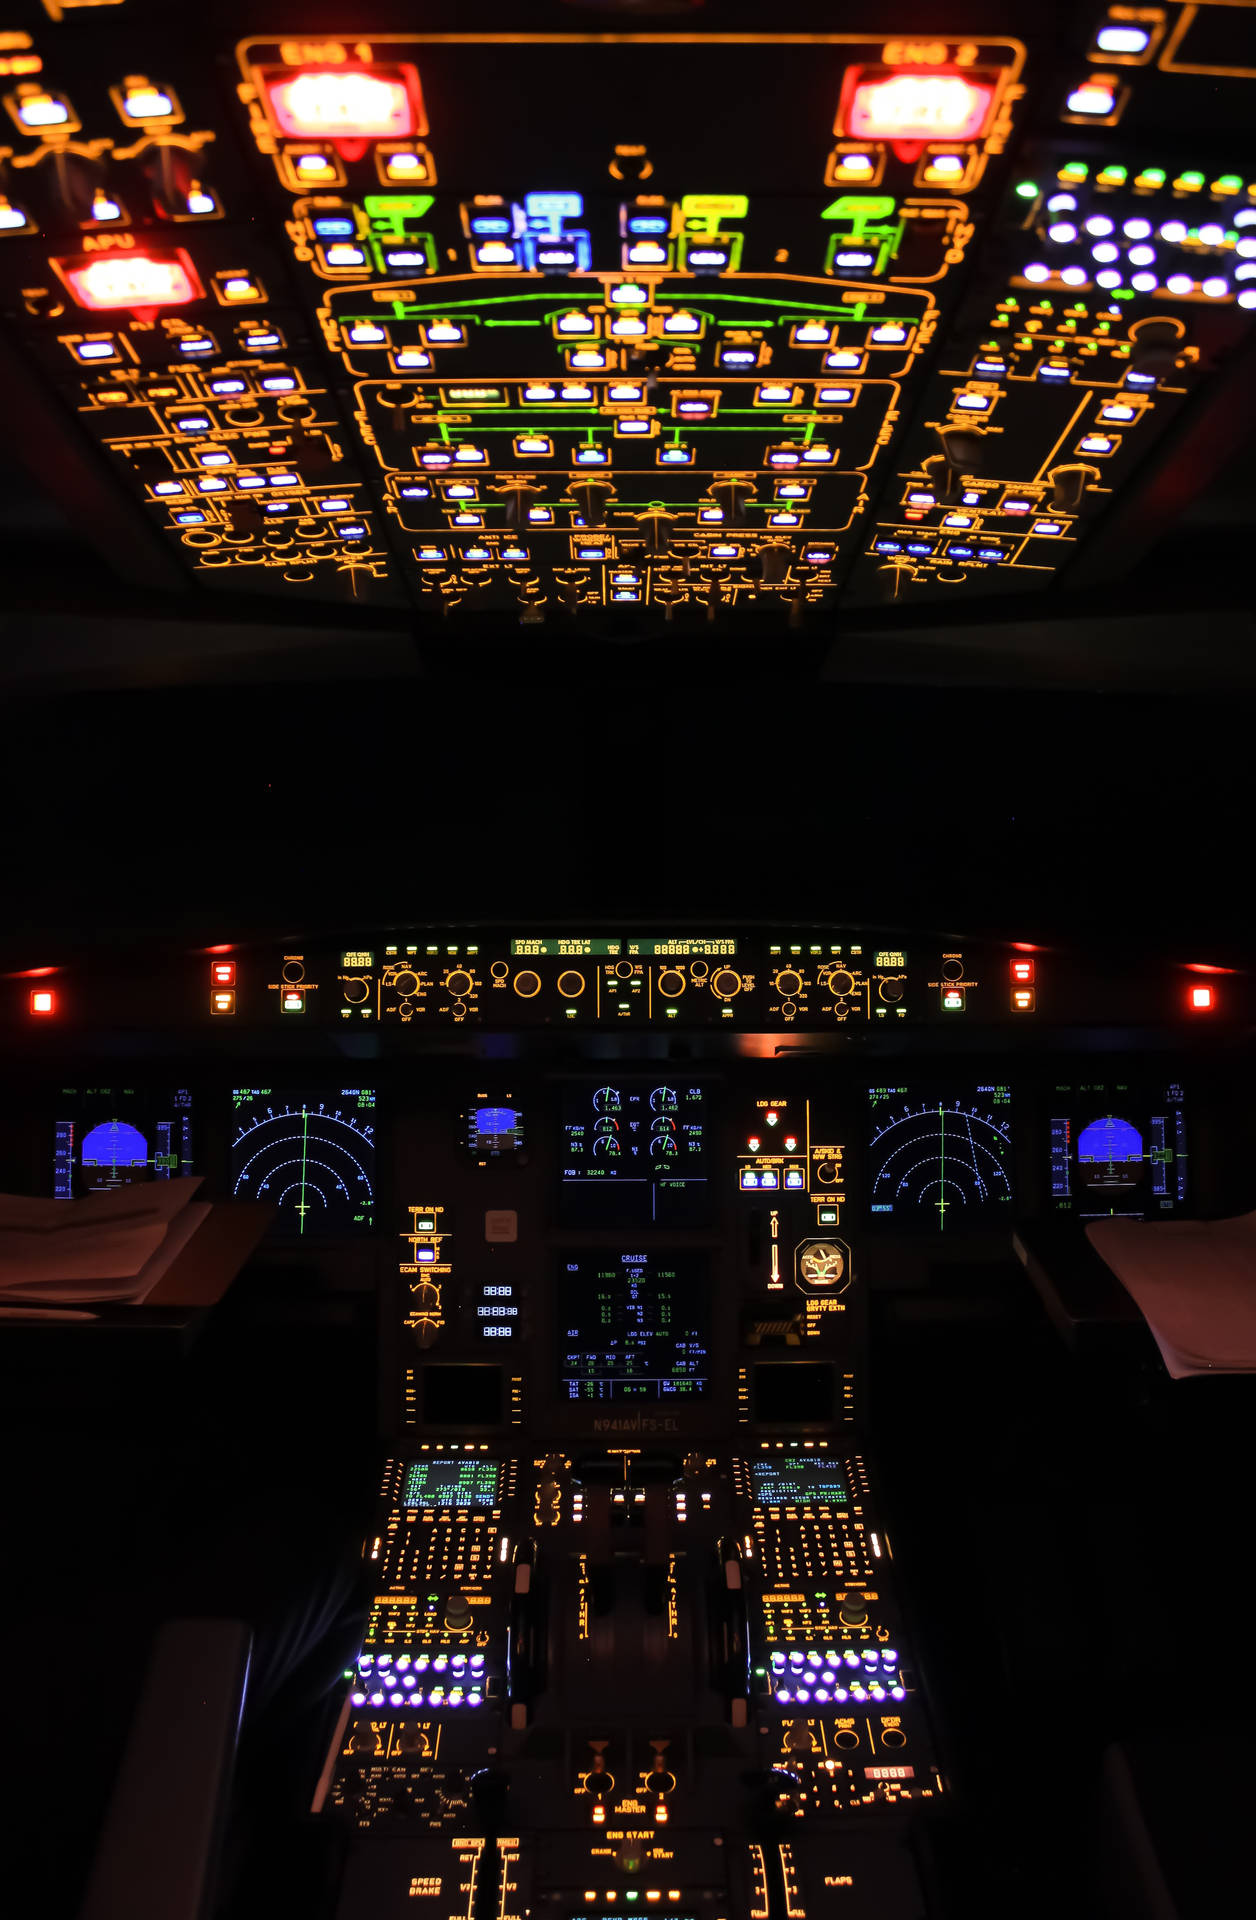 PMDG Boeing 777-200LRX nightime cockpit by HYPPthe on DeviantArt